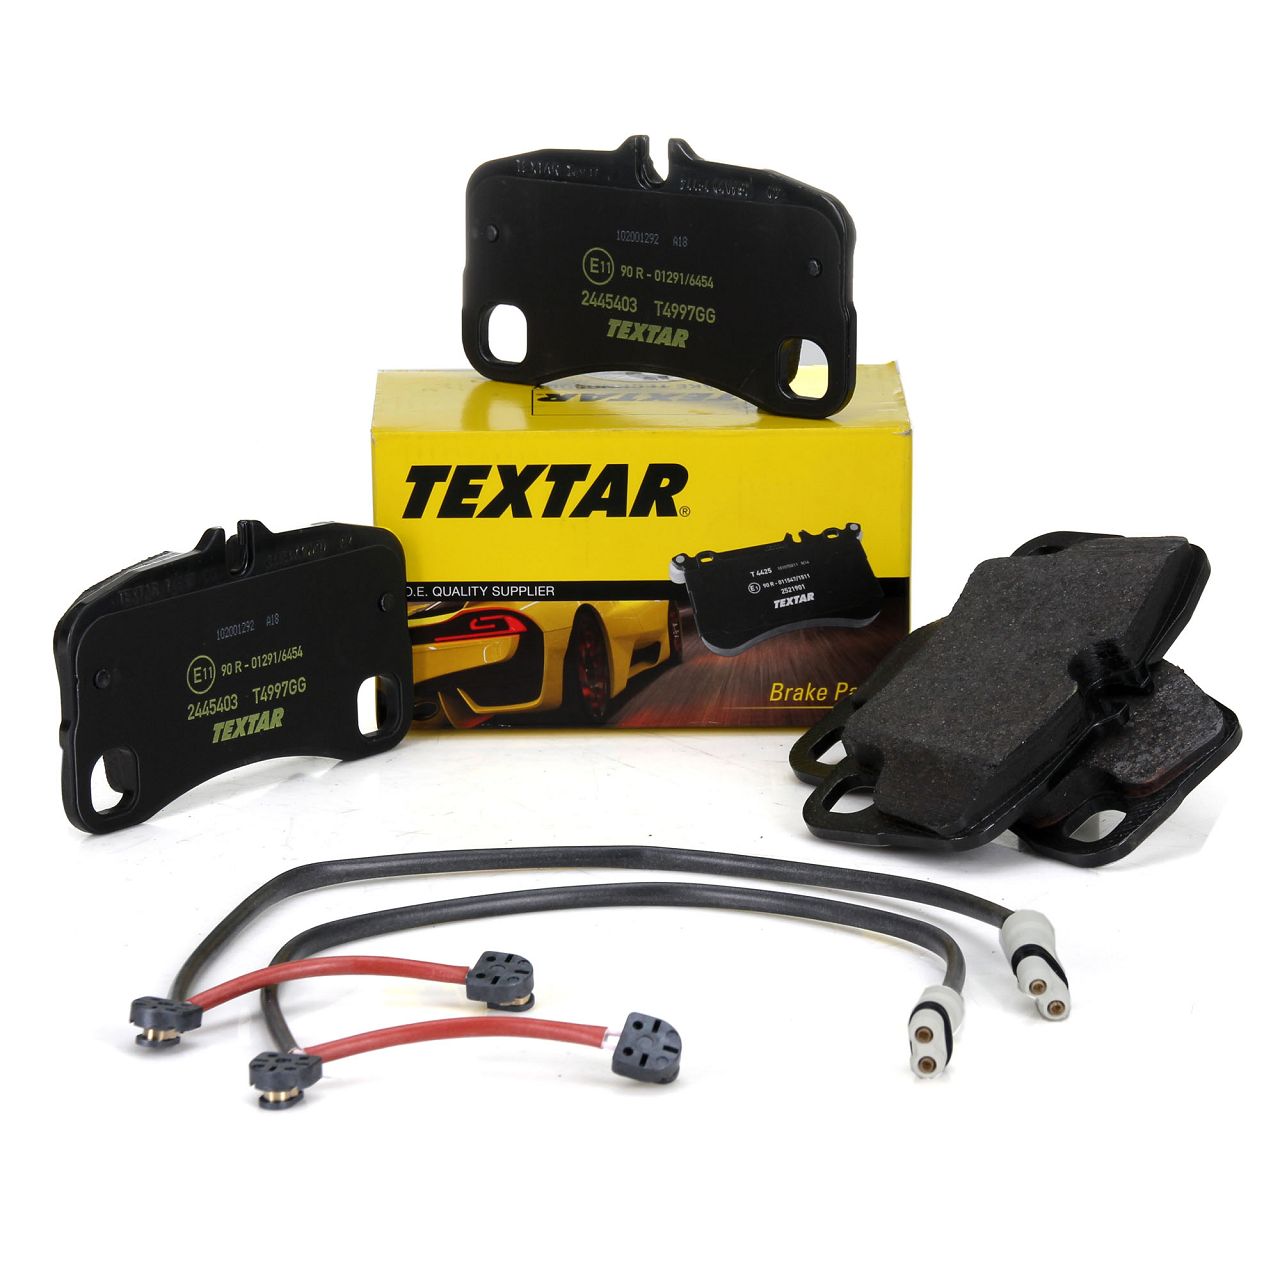 TEXTAR 2445403 Bremsbeläge + Wako PORSCHE 997 3.6 / 3.8 Turbo / S hinten